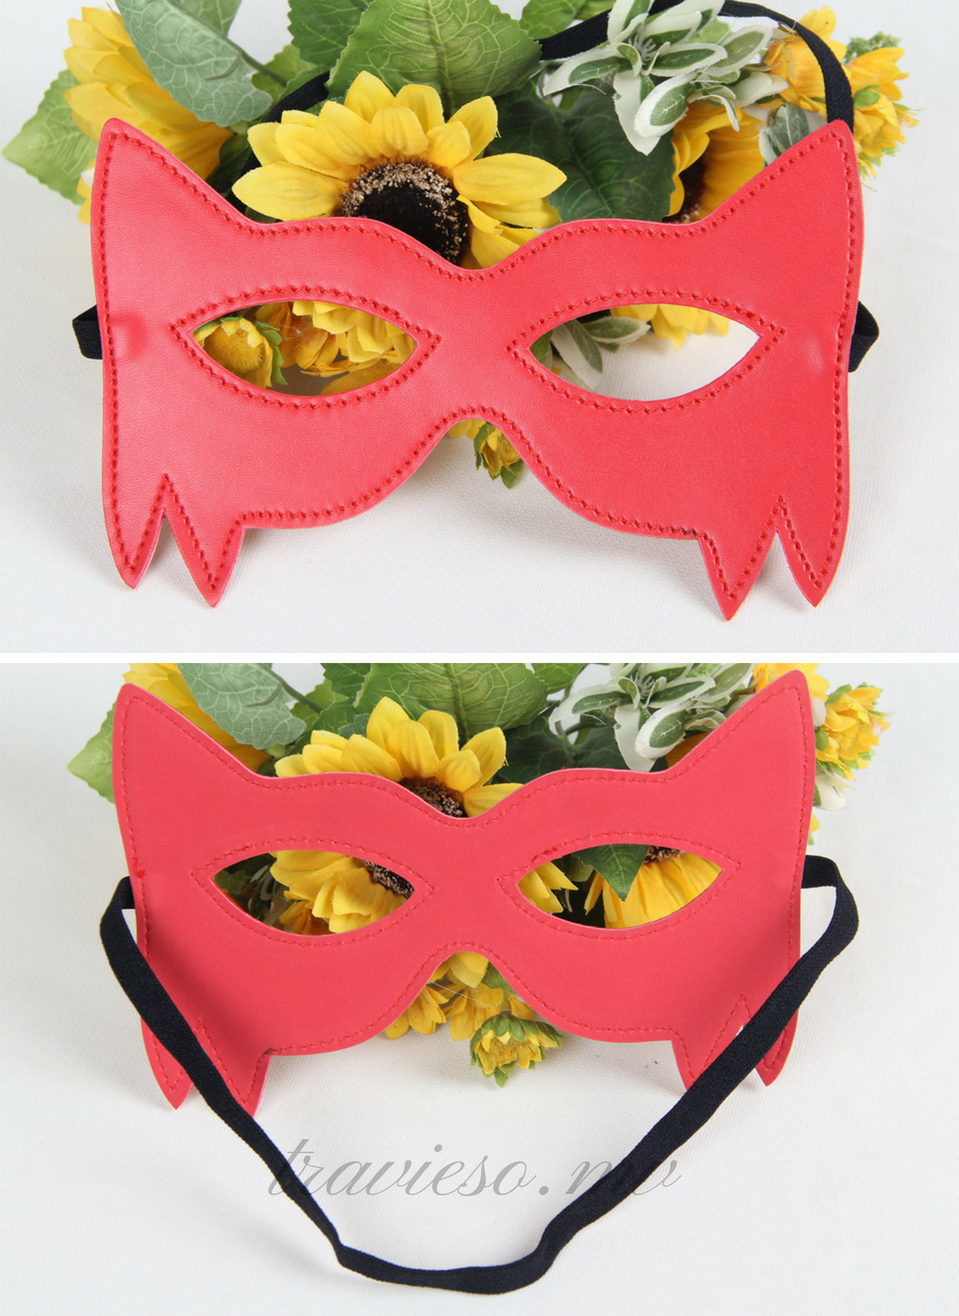 Leather Eye Mask - travieso.mv